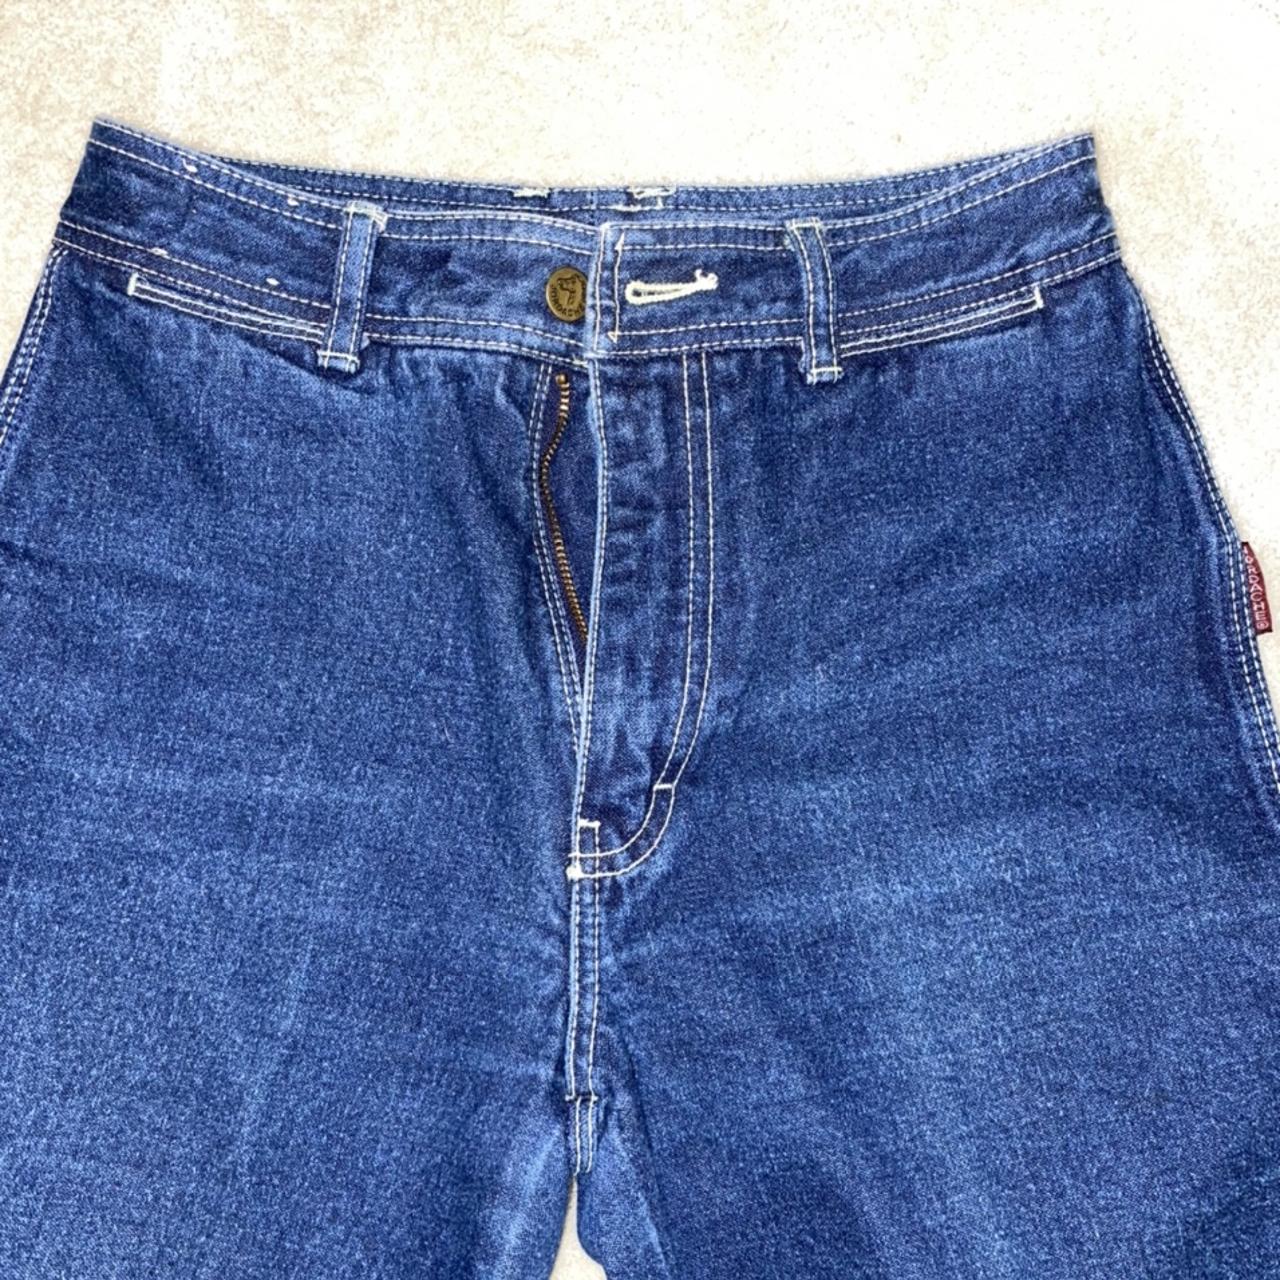 Vintage Jordache jeans. Size 30, but best suited for... - Depop